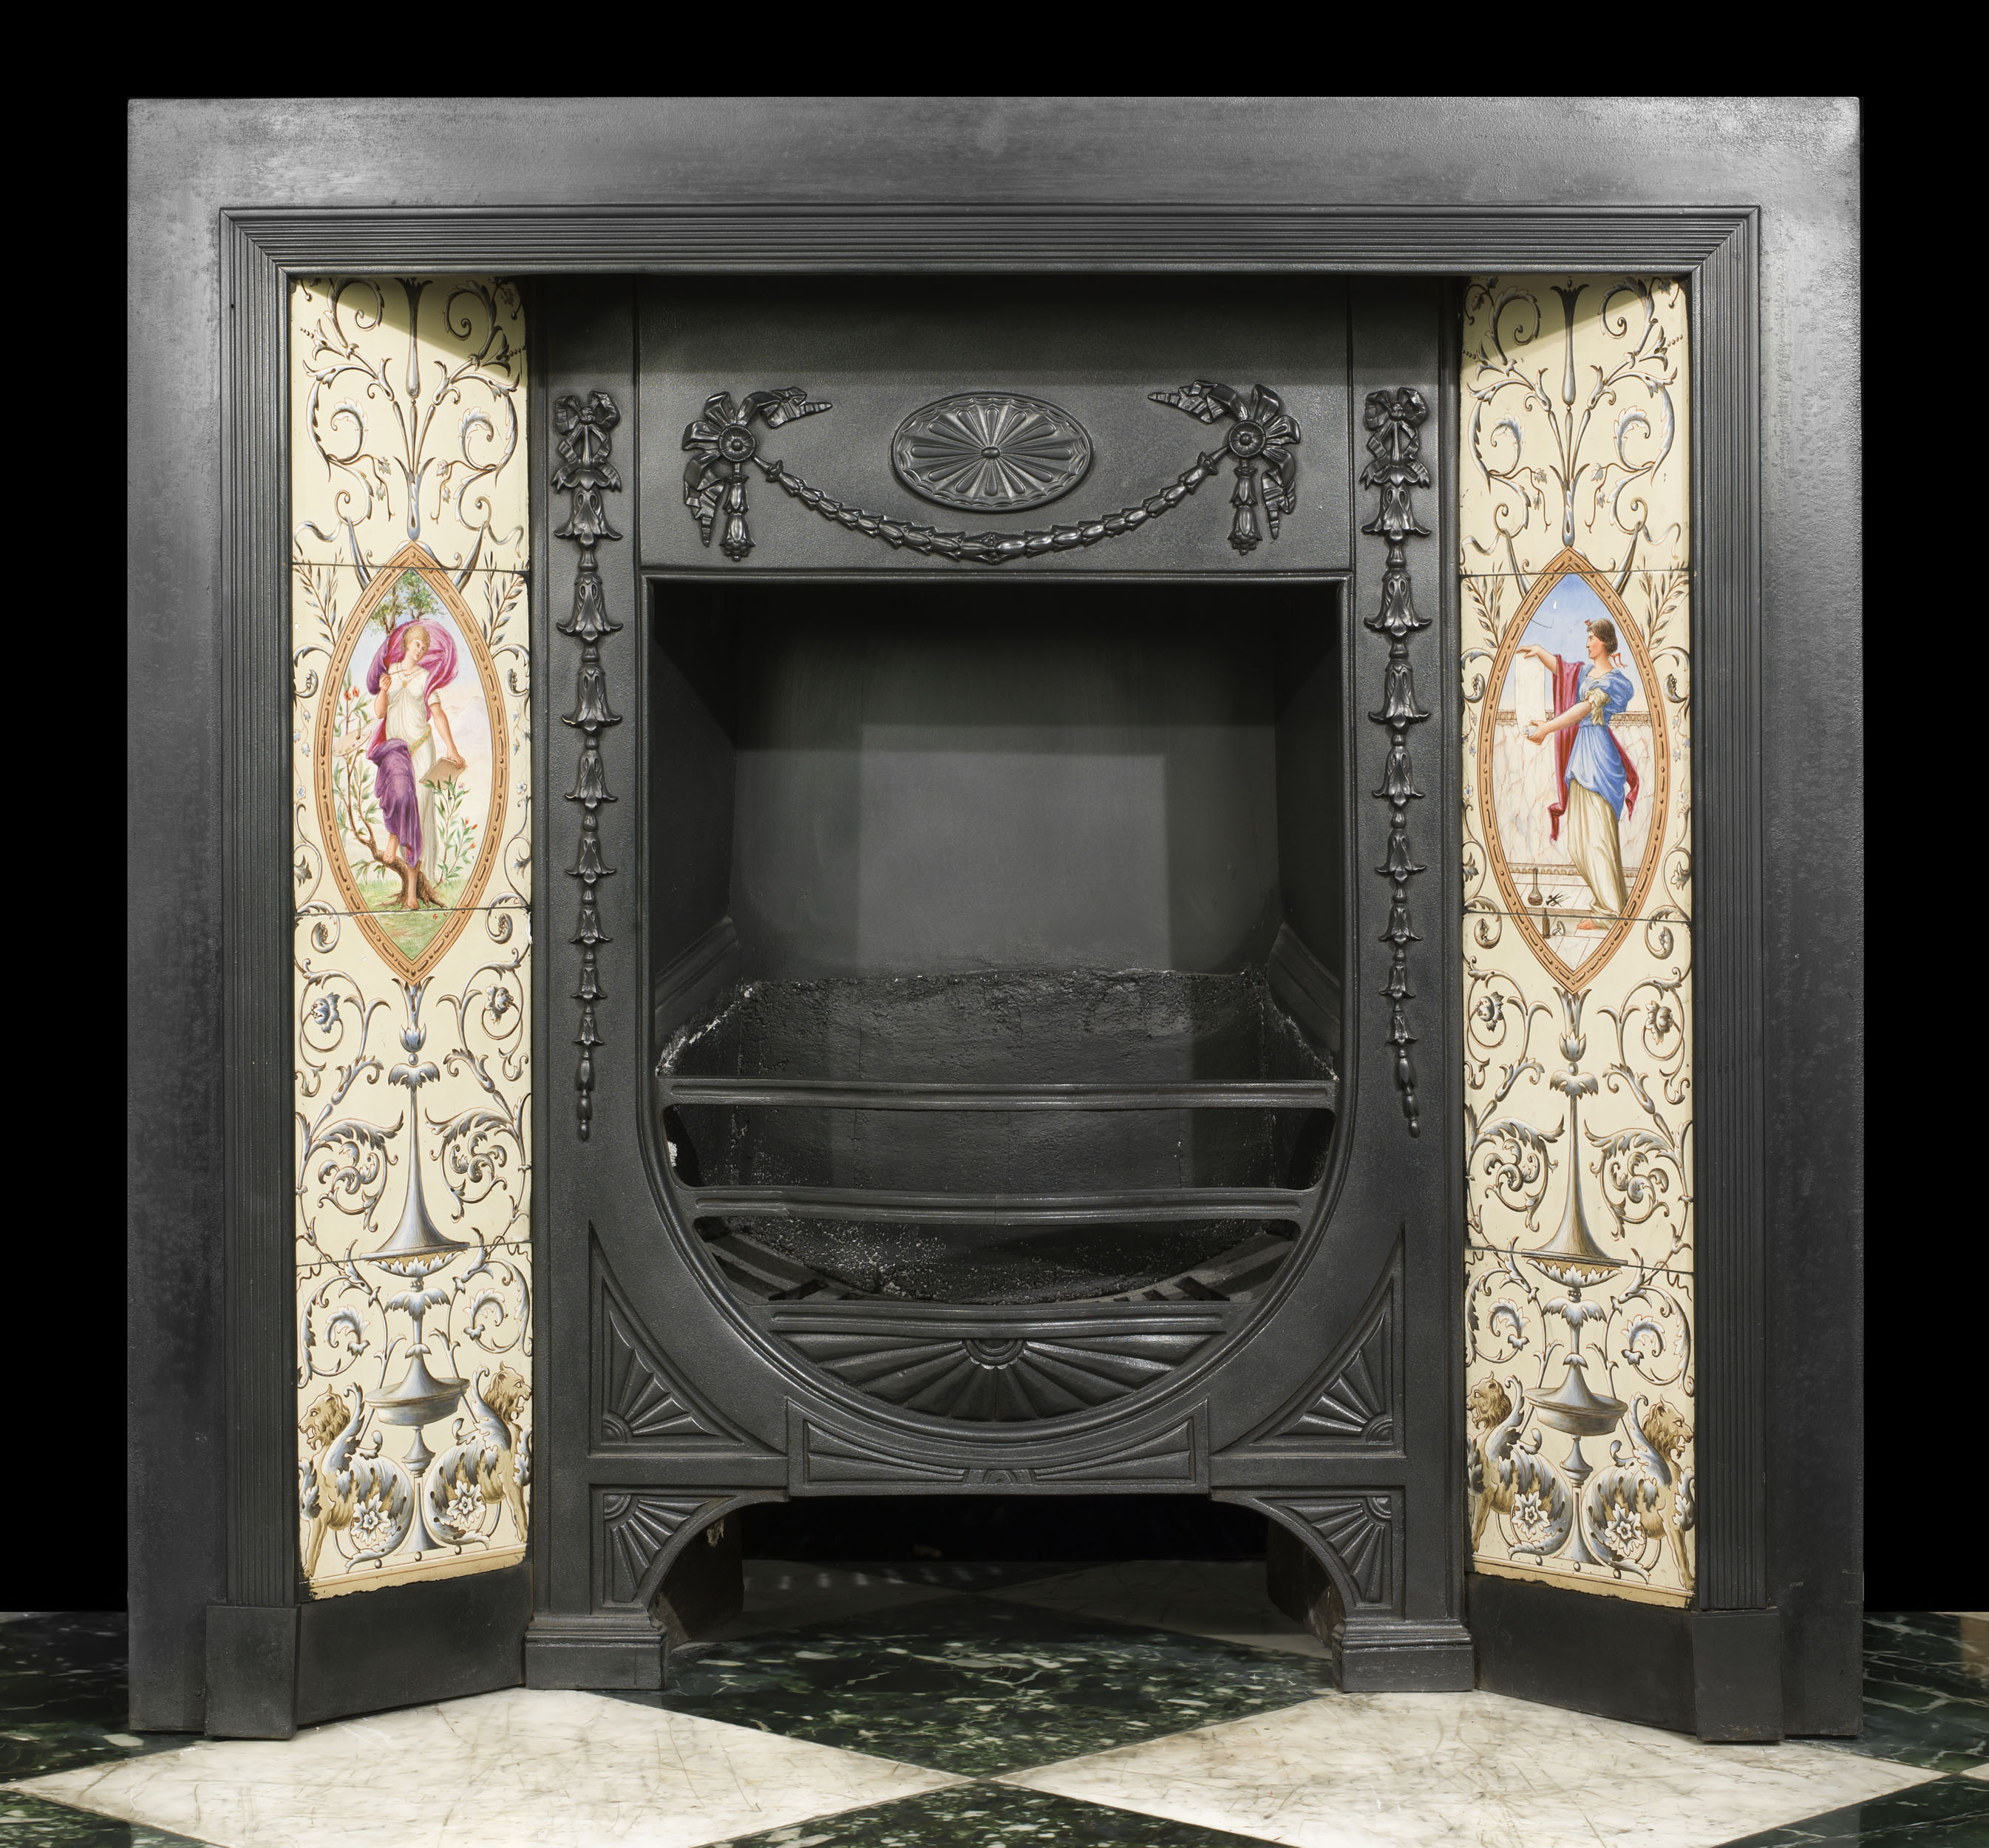  A Minton Tiled Cast Iron Fireplace Insert